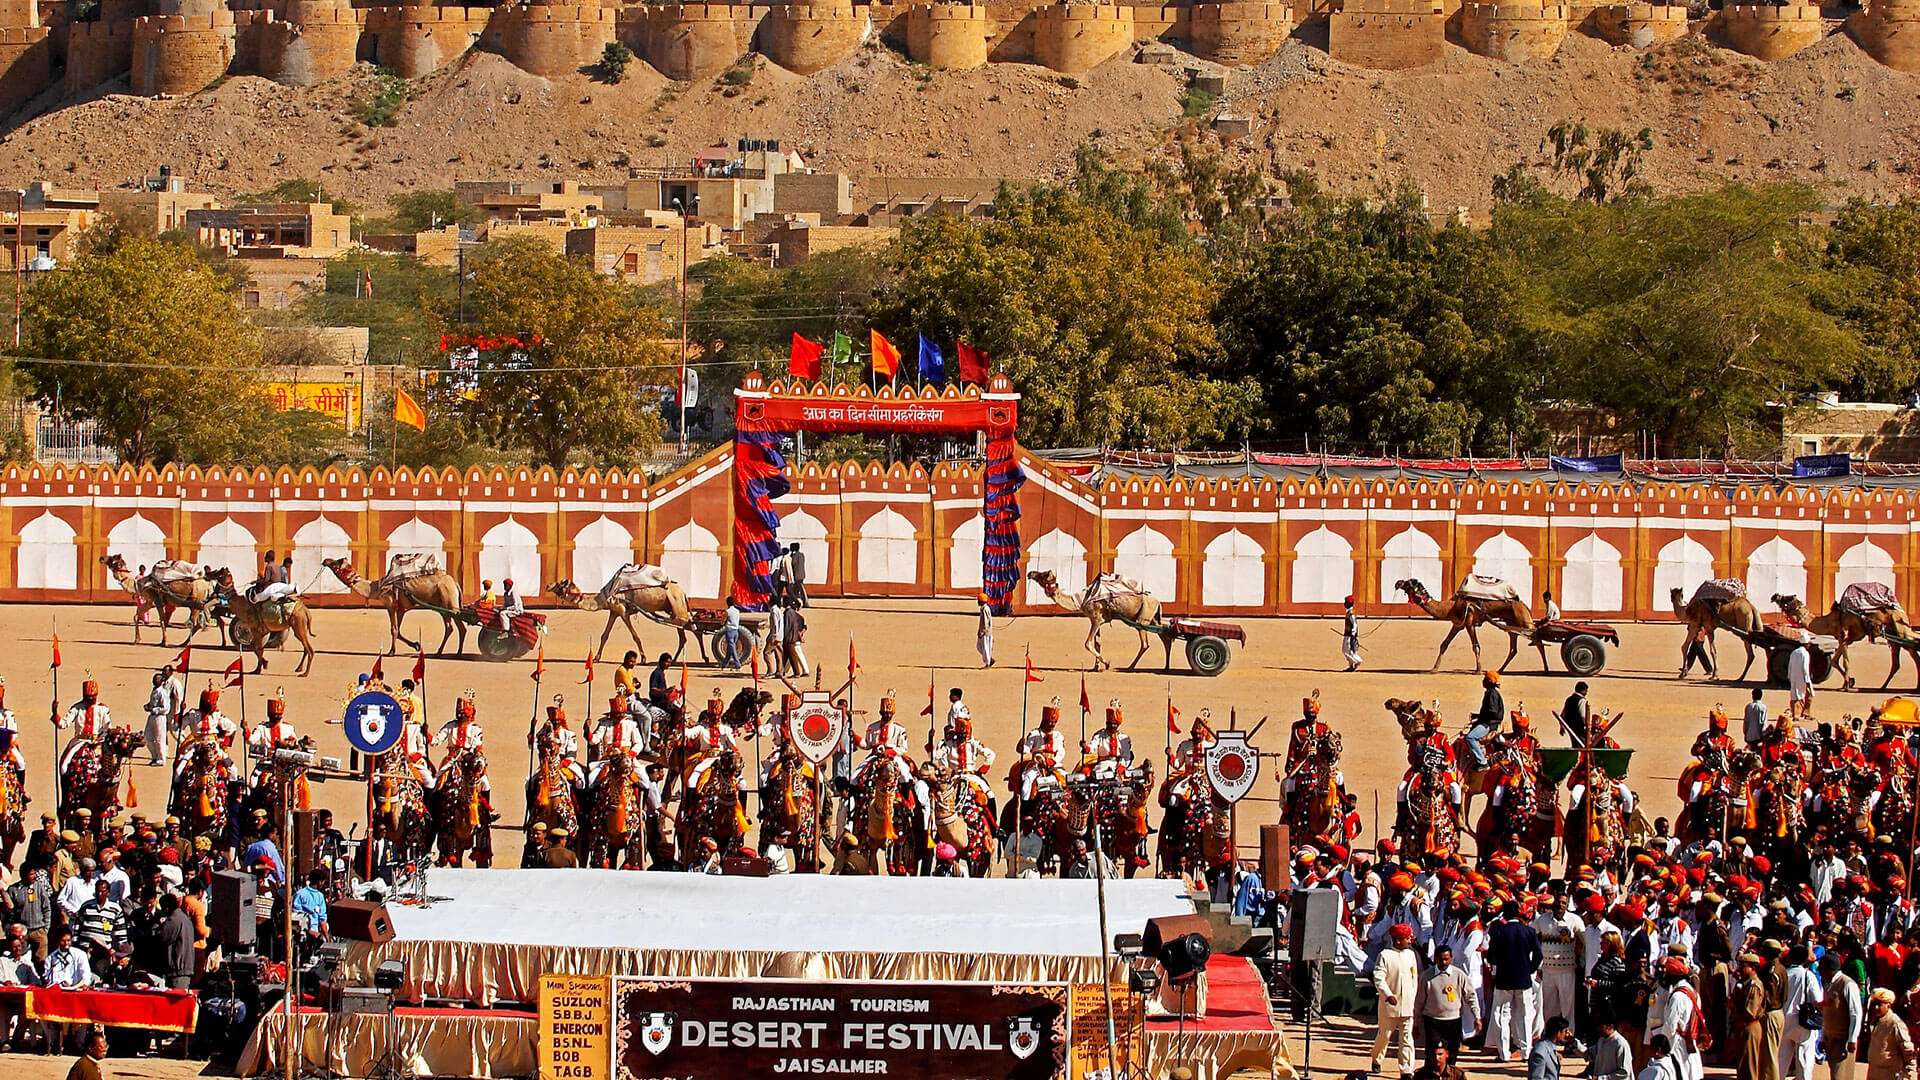 Desert Festival 2023 Jaisalmer History, Dates, Major Attractions